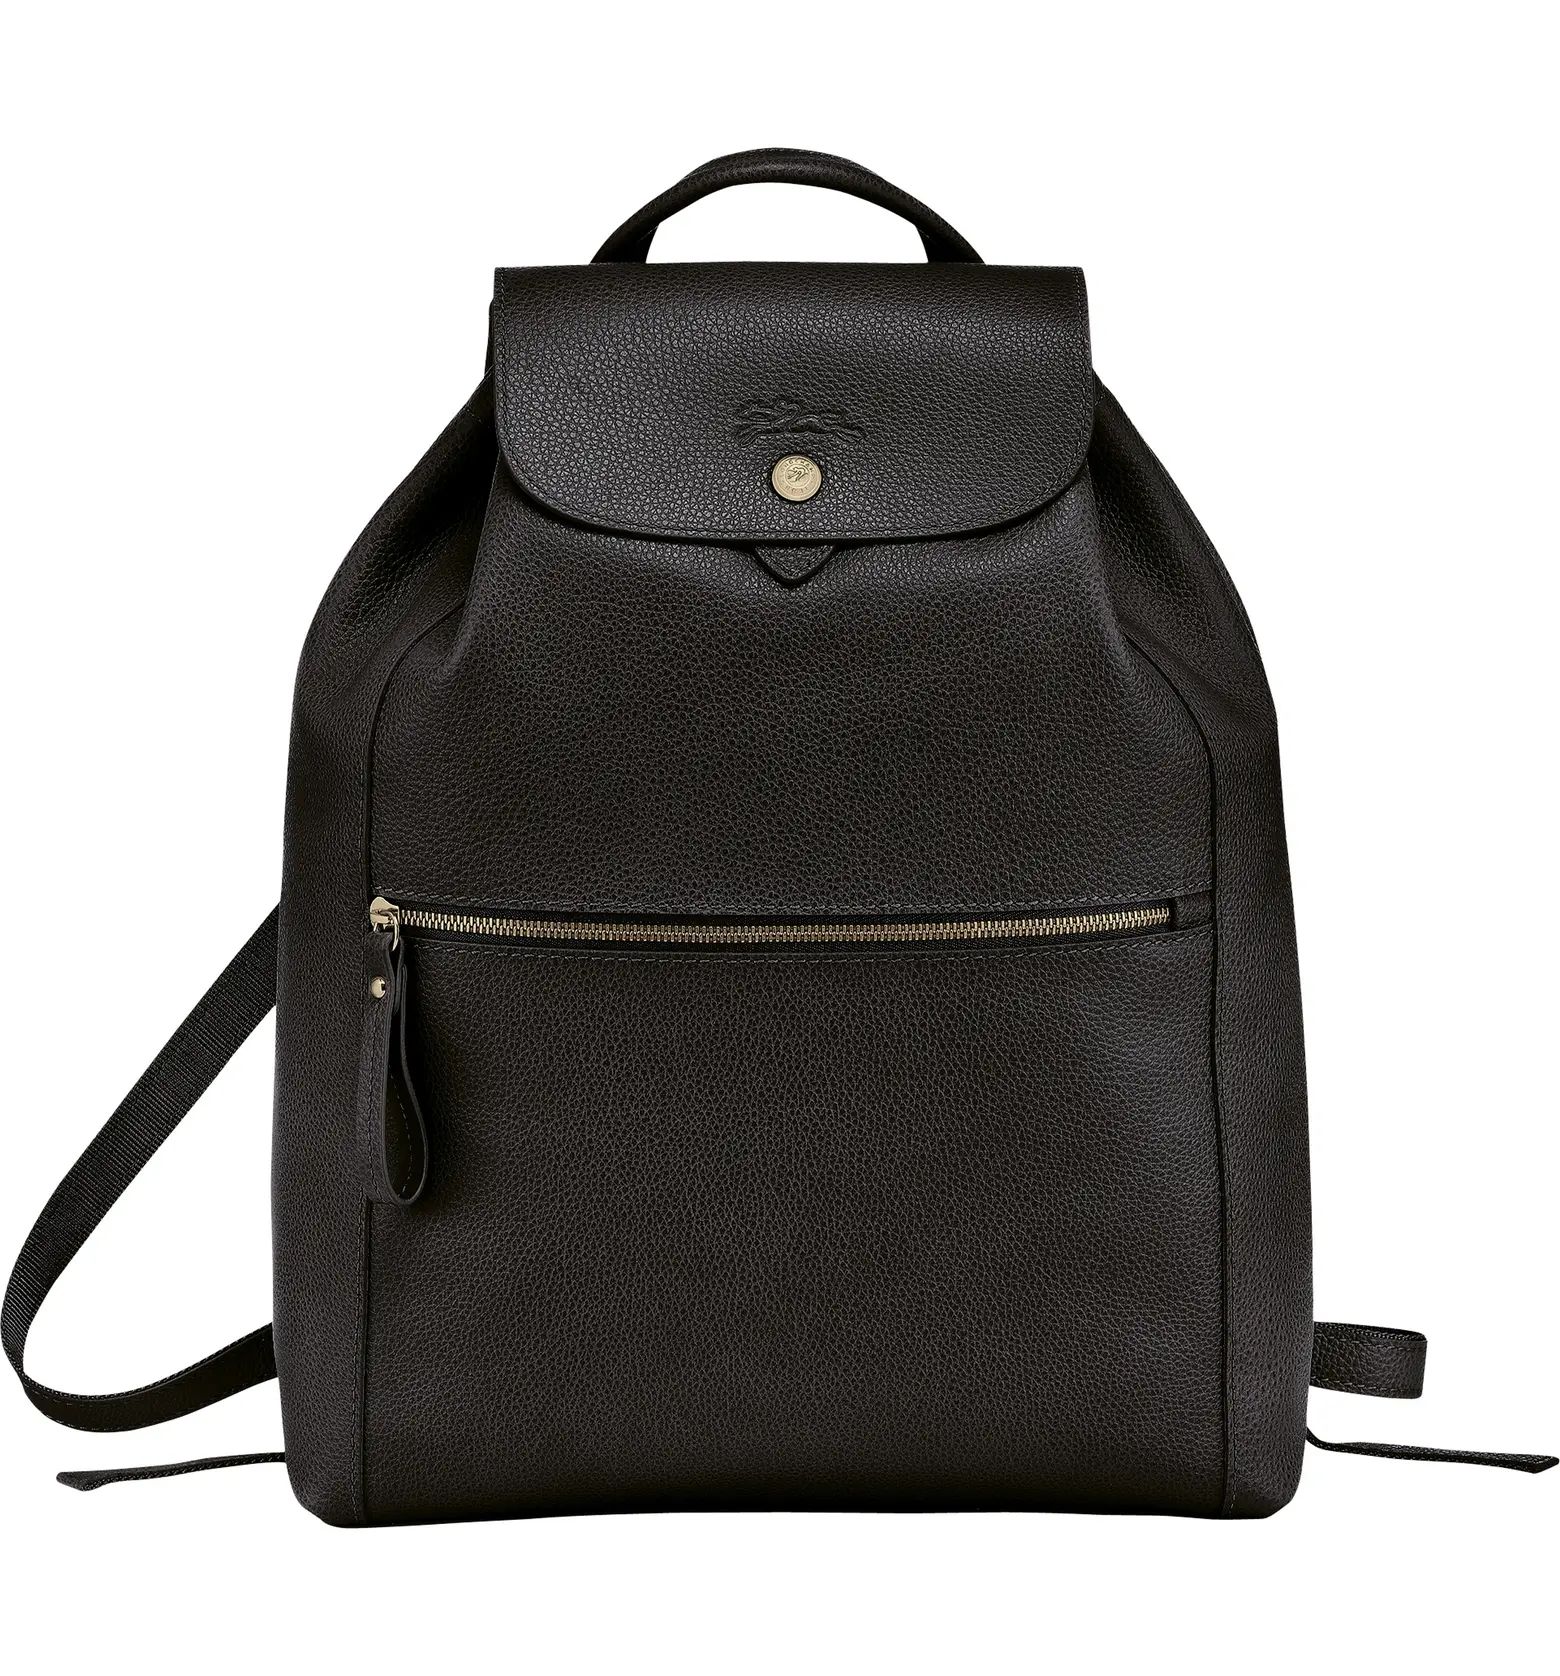 Le Foulonne Leather BackpackLONGCHAMP | Nordstrom